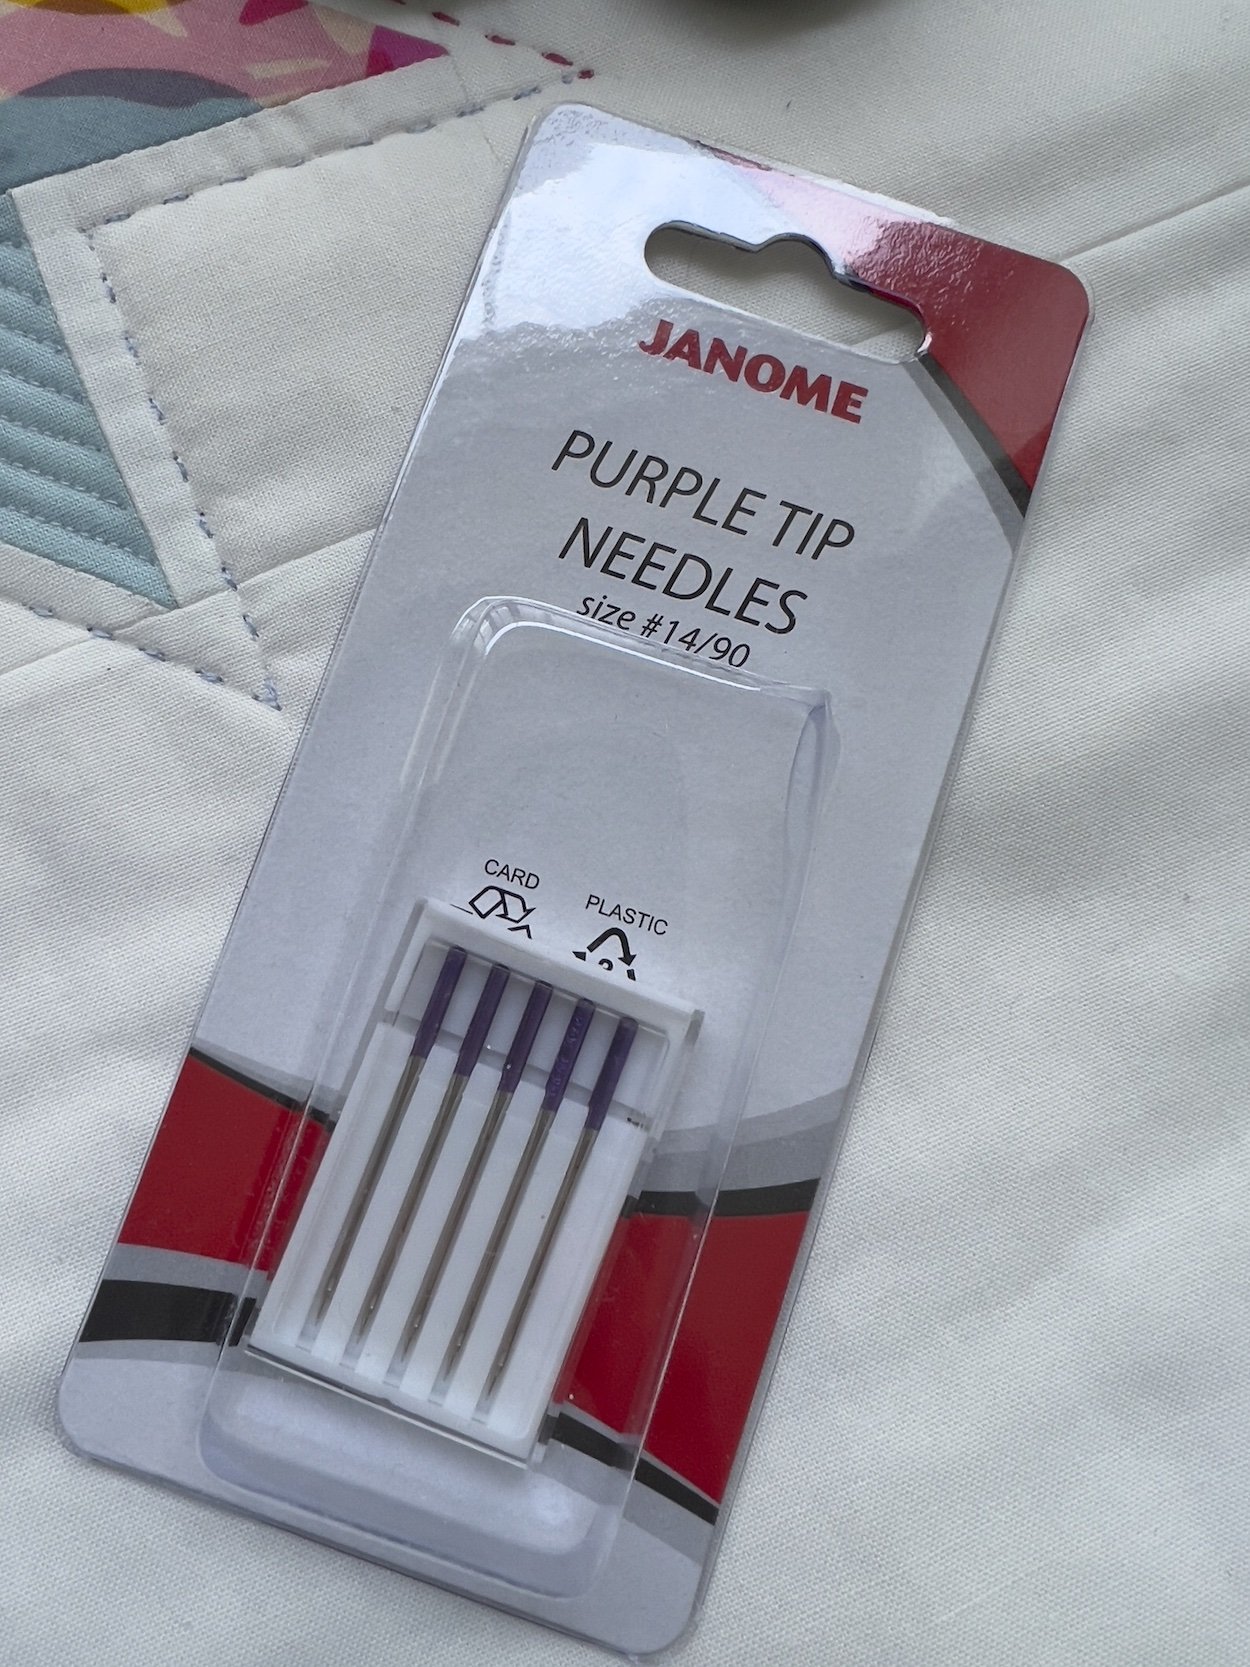 Janome Purple Tip Sewing Machine Needles